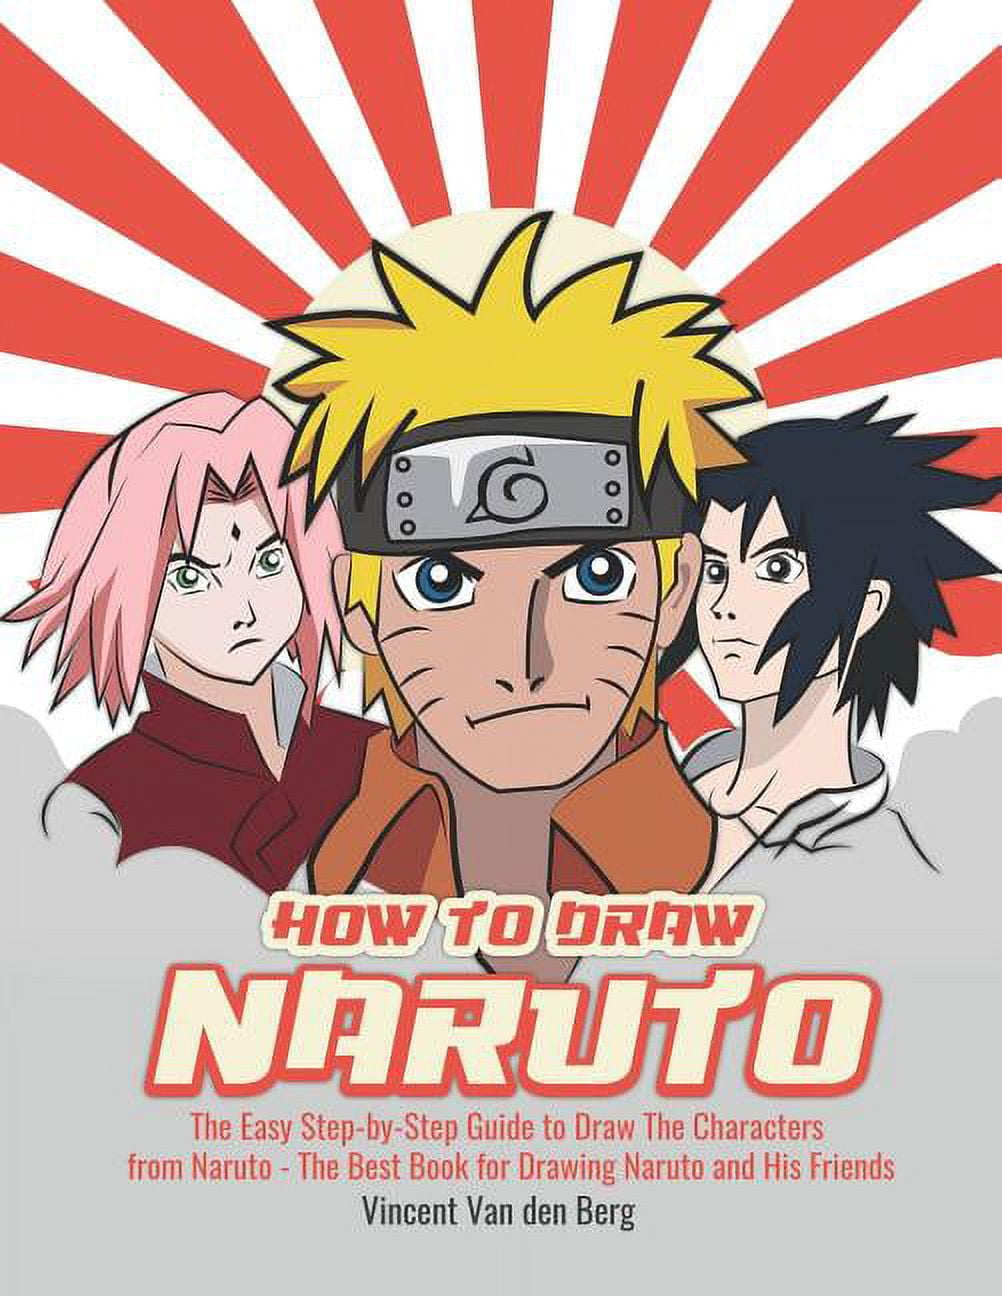 How to Draw Naruto Uzumaki from Naruto (Naruto) Step by Step